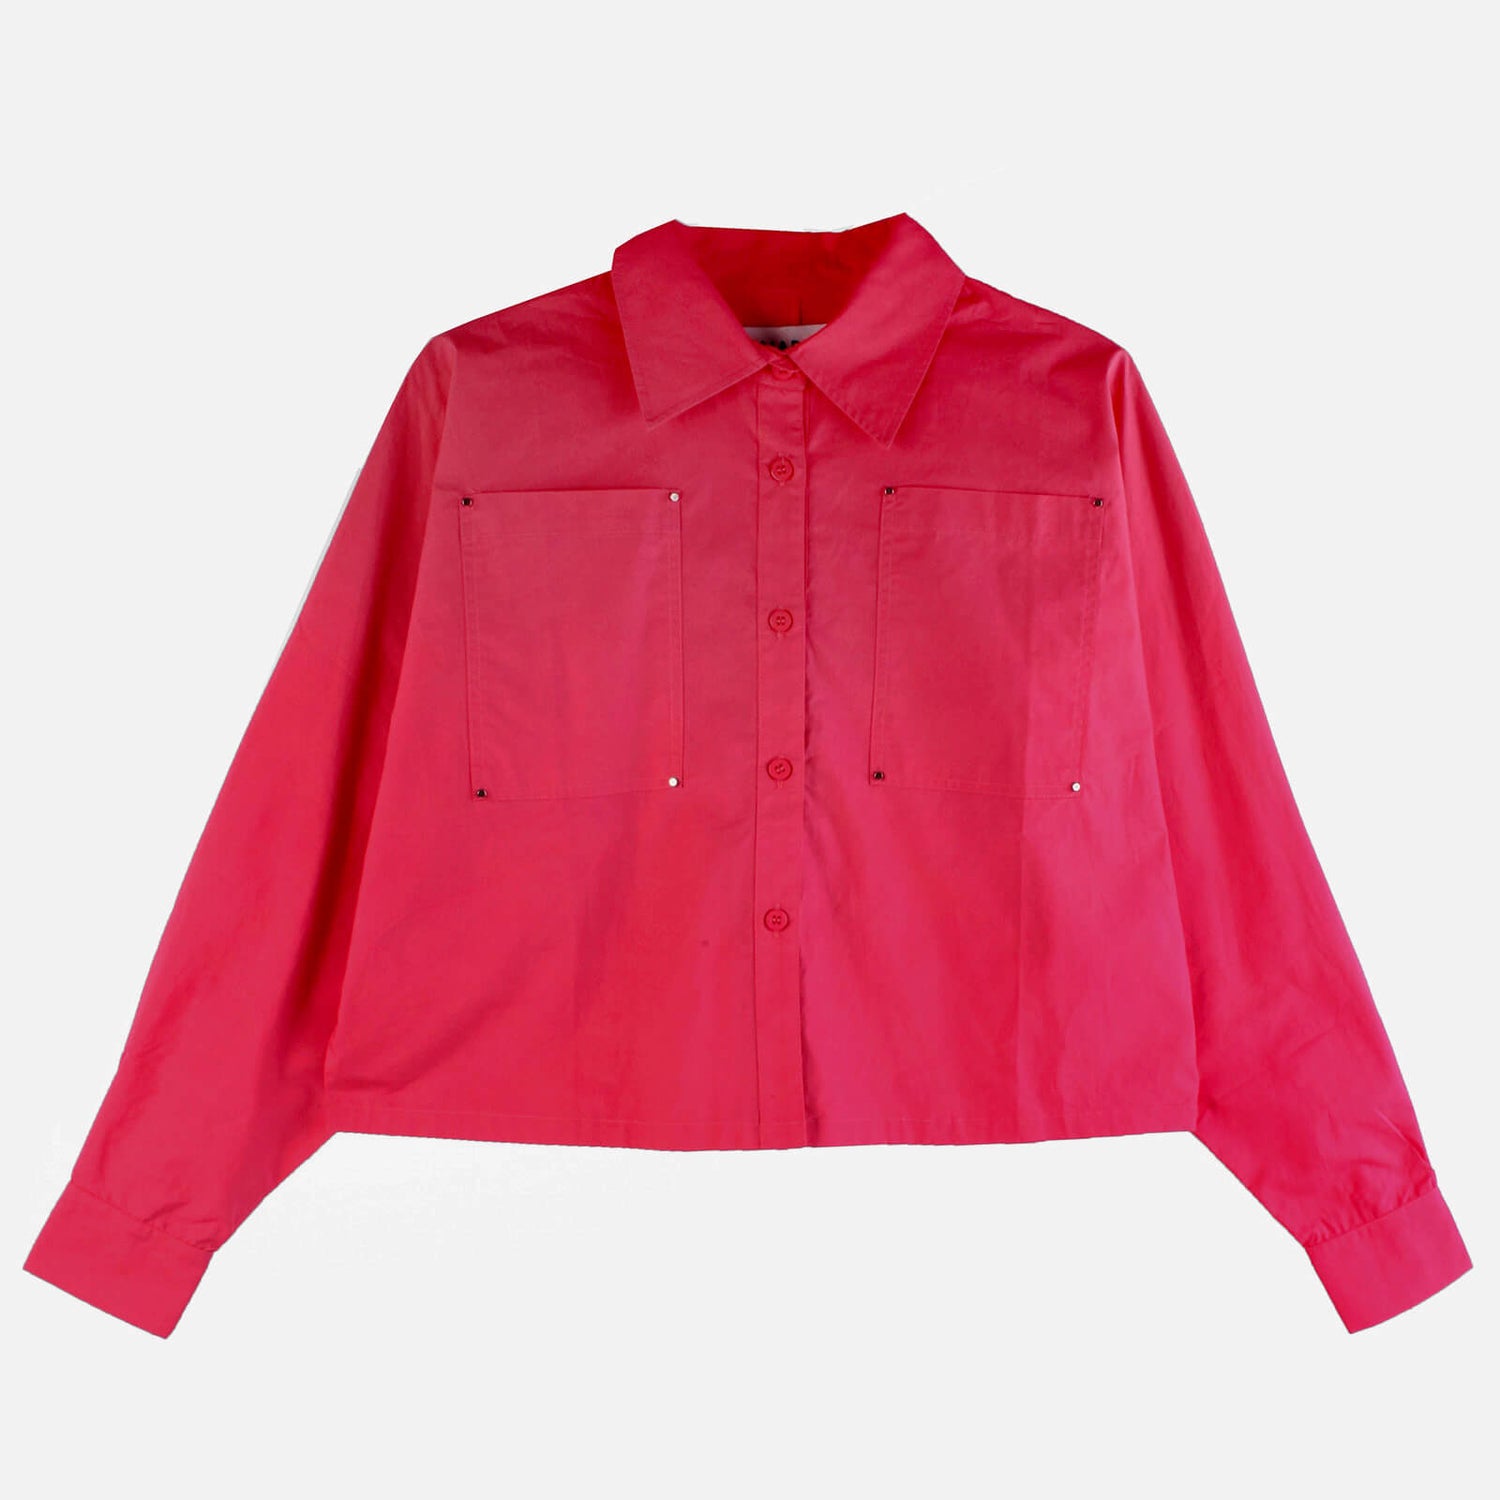 L.F Markey Women's Lennox Shirt - Fuchsia - UK 6